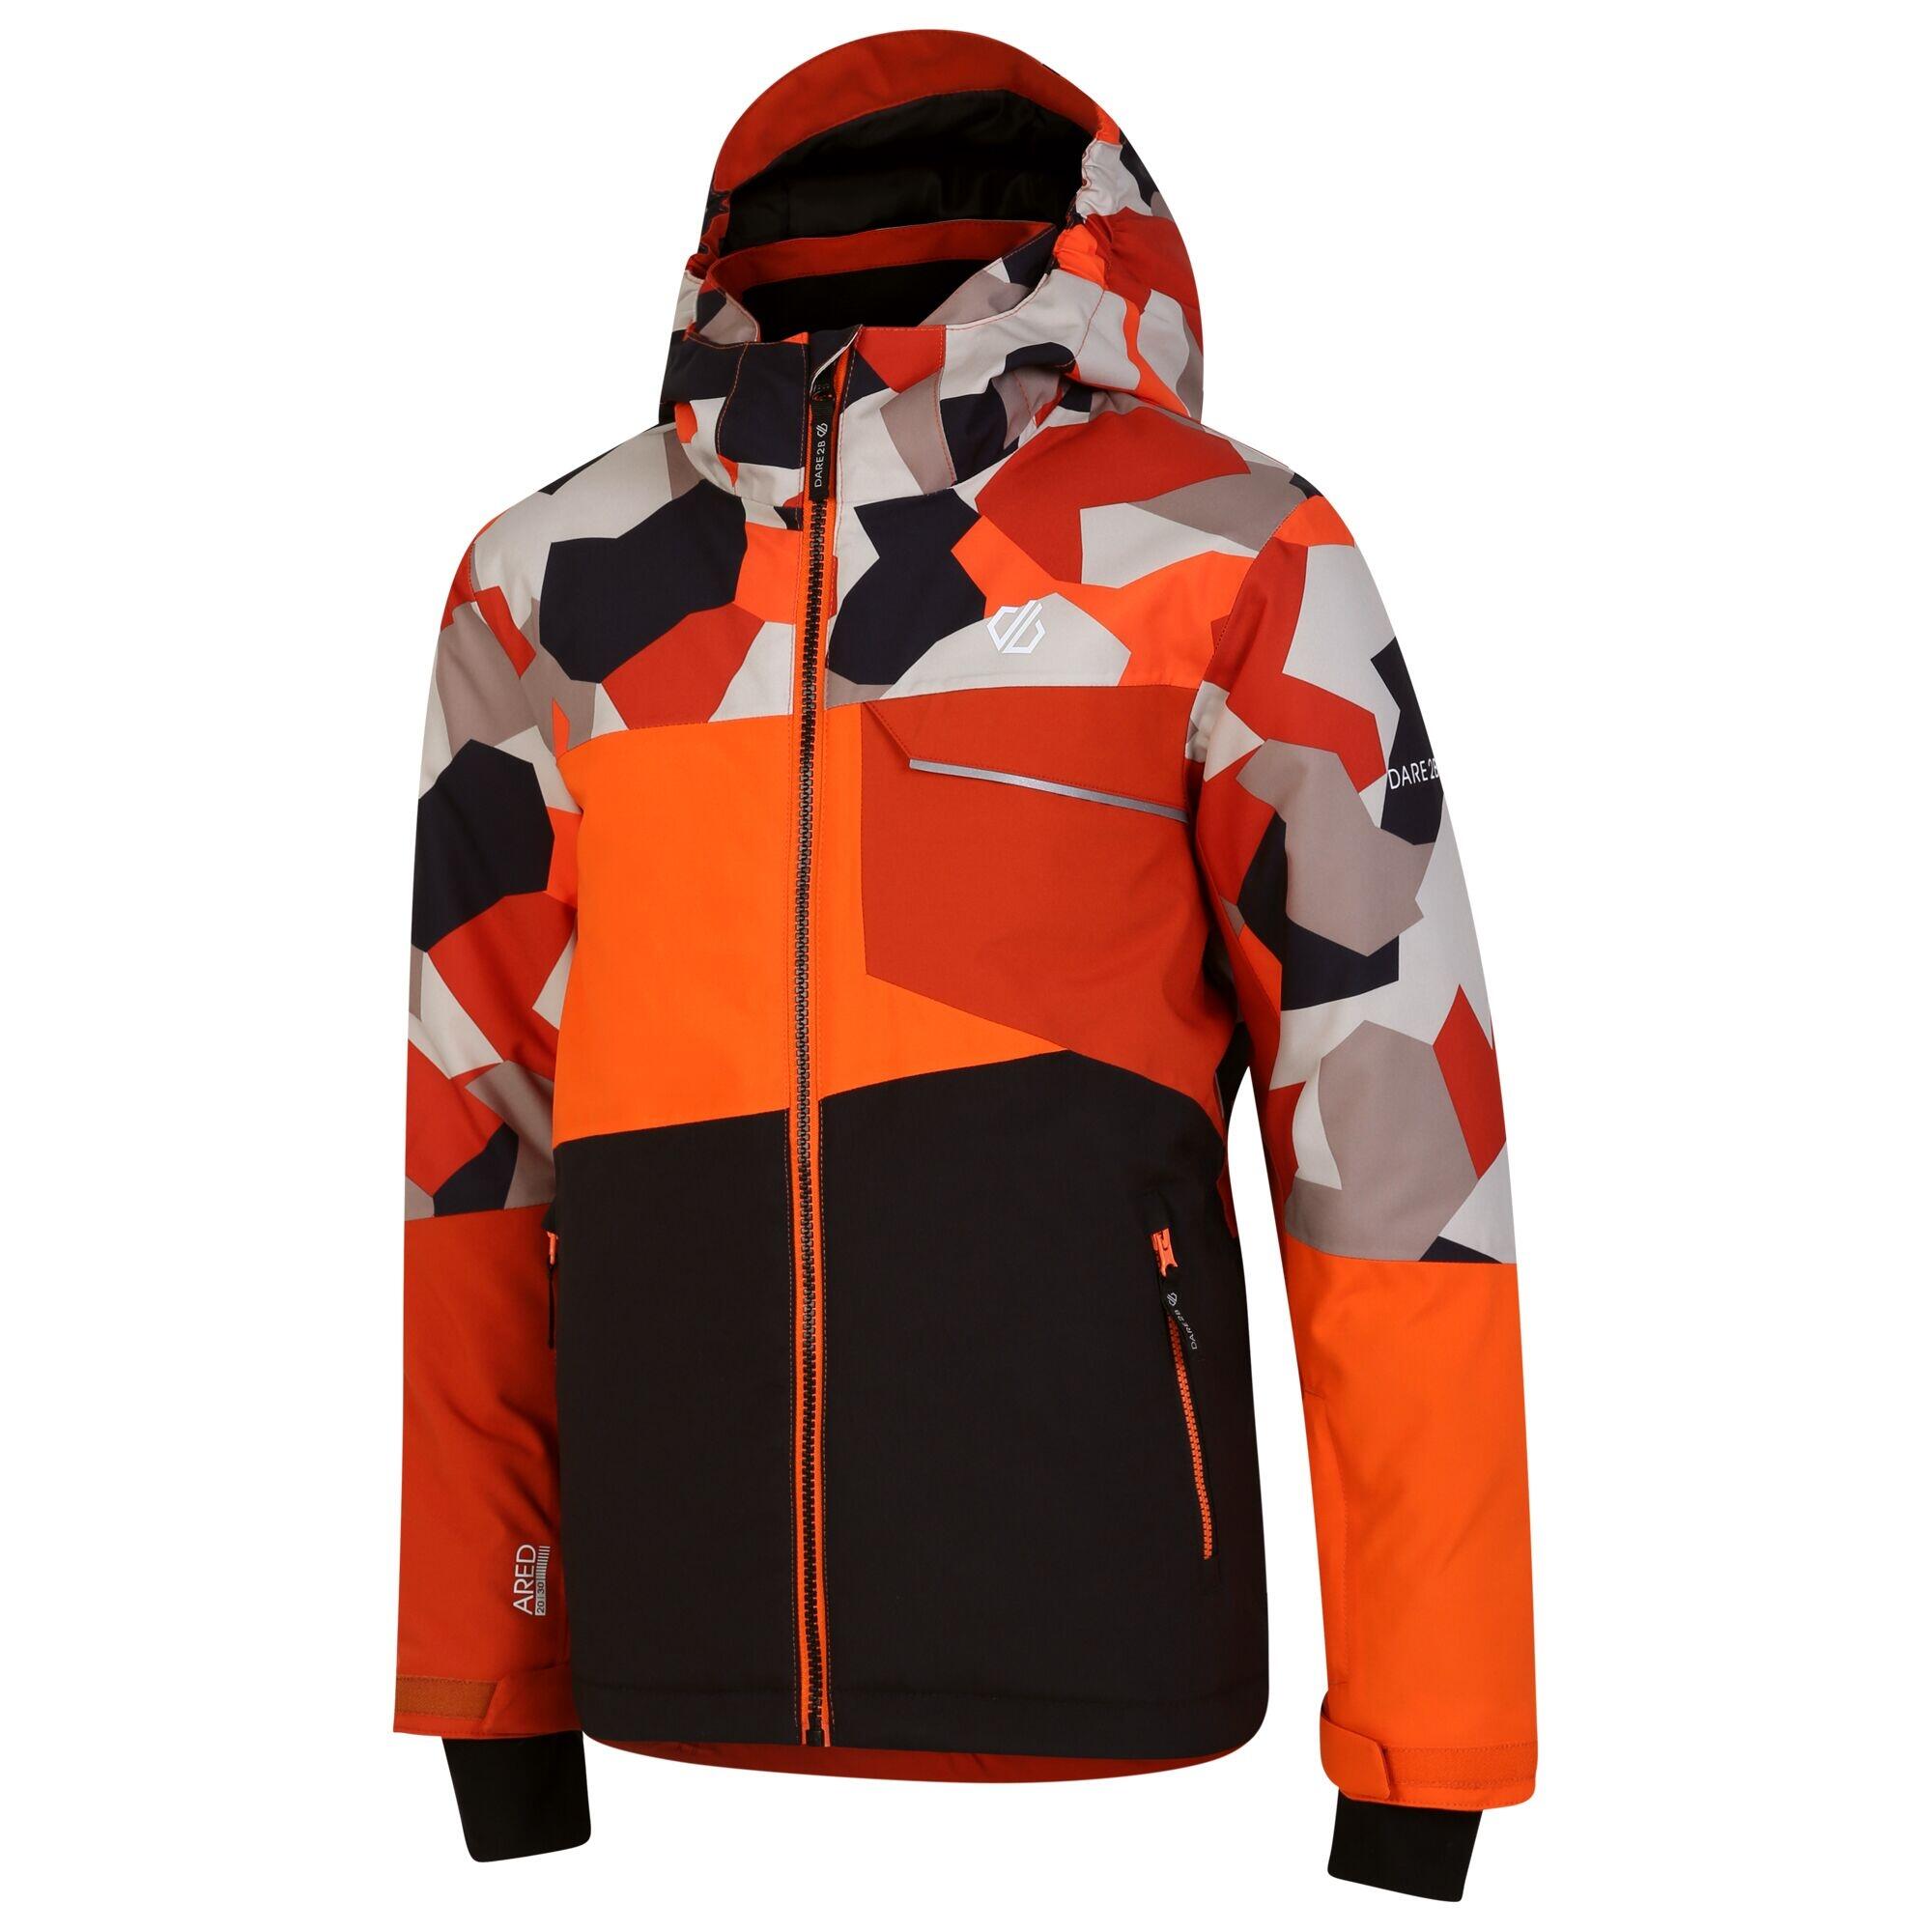 Childrens/Kids Traverse Geo Camo Ski Jacket (Puffins Orange/Black) 4/5